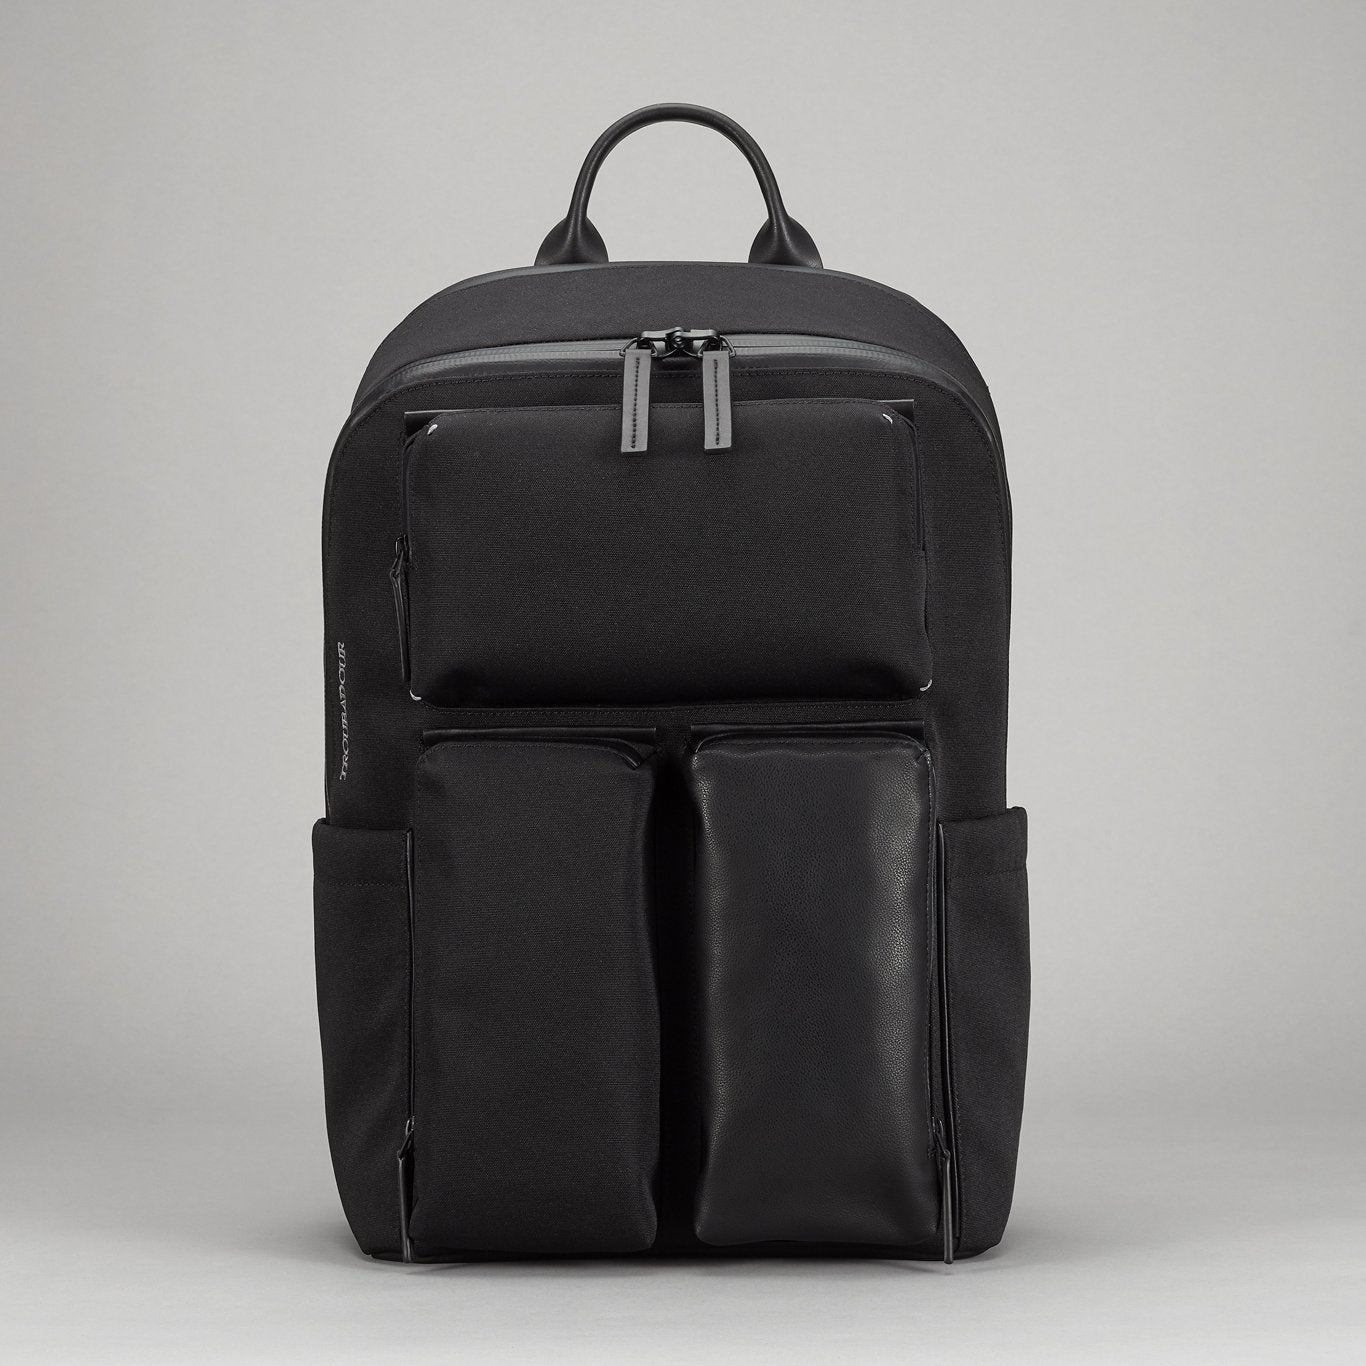 Troubadour Explorer Ridge Backpack, Lightweight Waterproof Fabric, Black